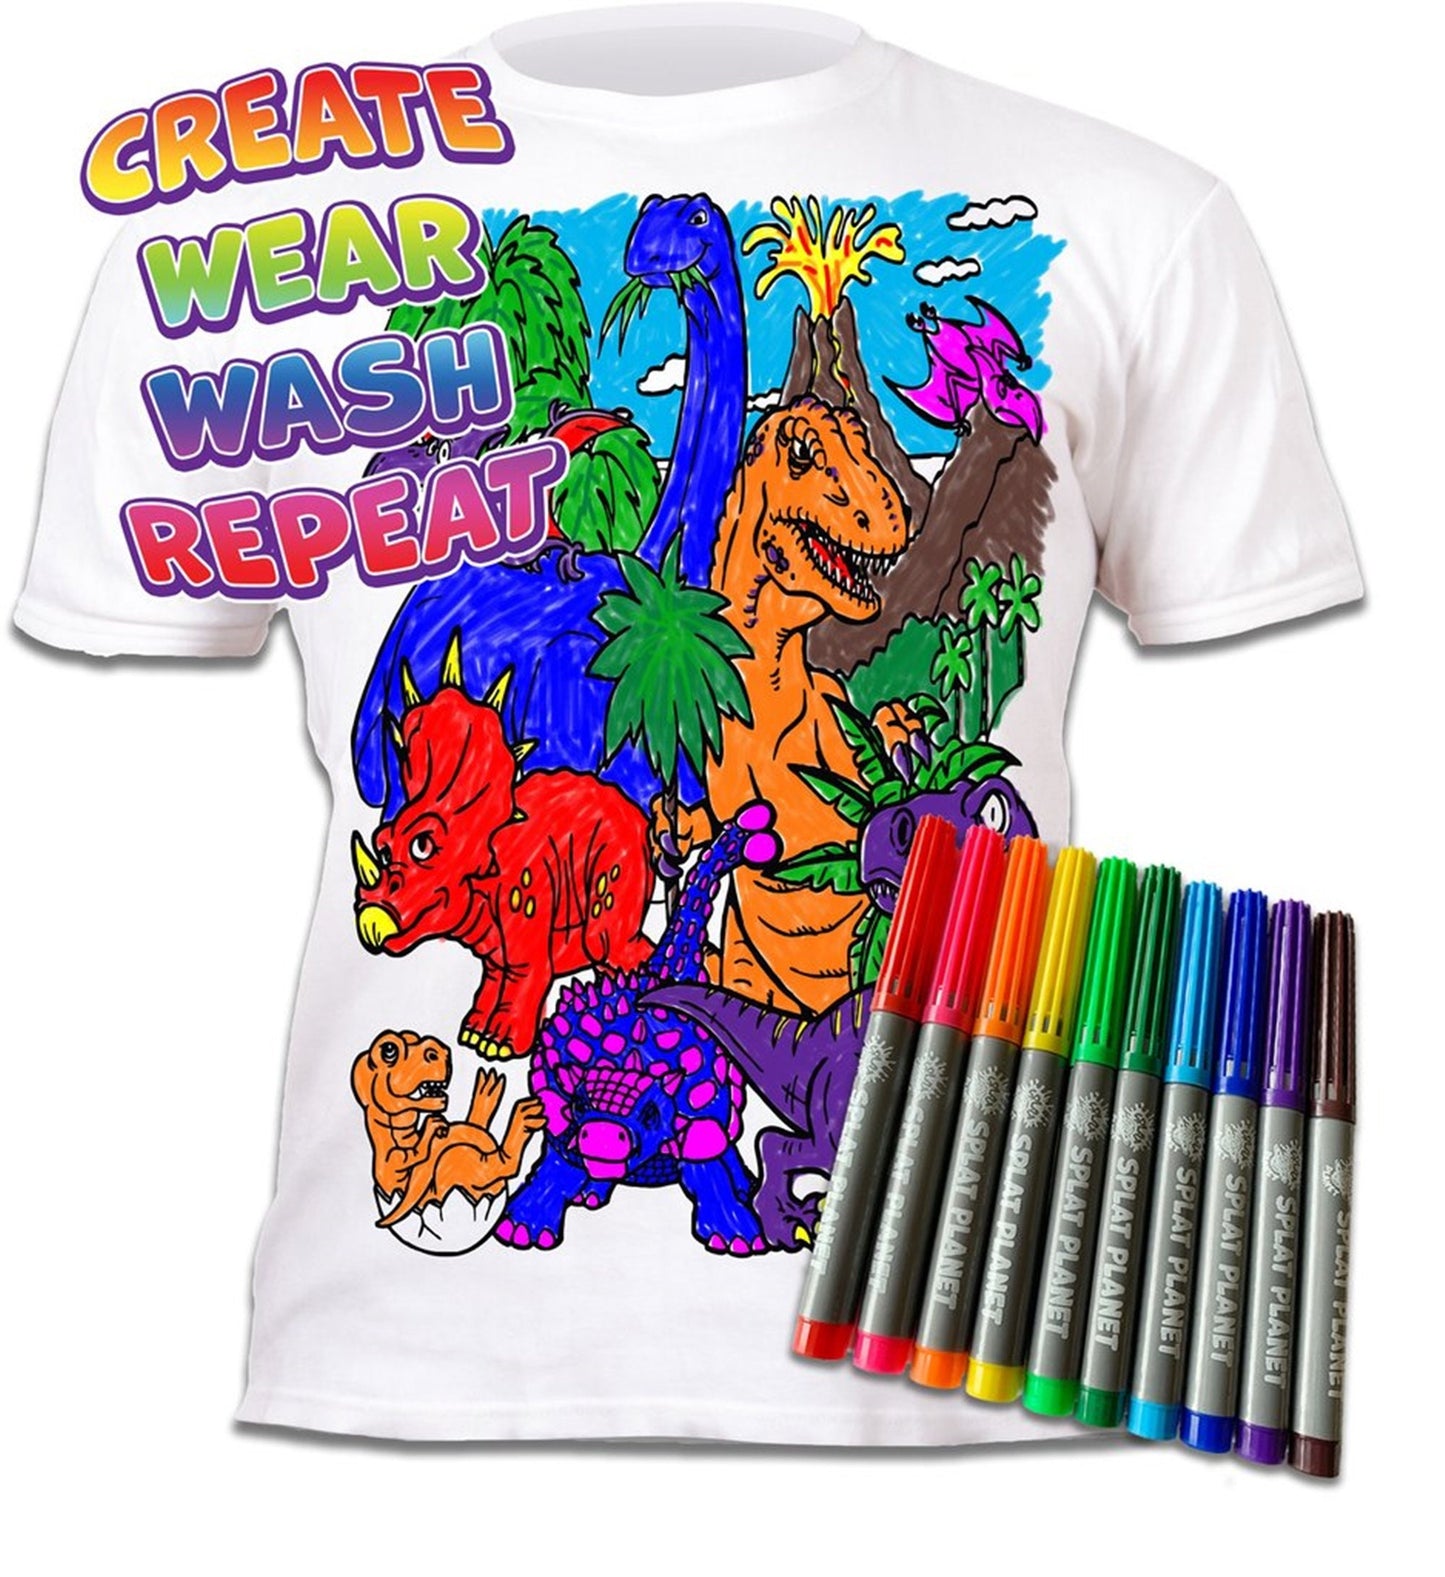 Splat Planet Colour In Children's T-Shirt - Dinosaurs - Pens Included